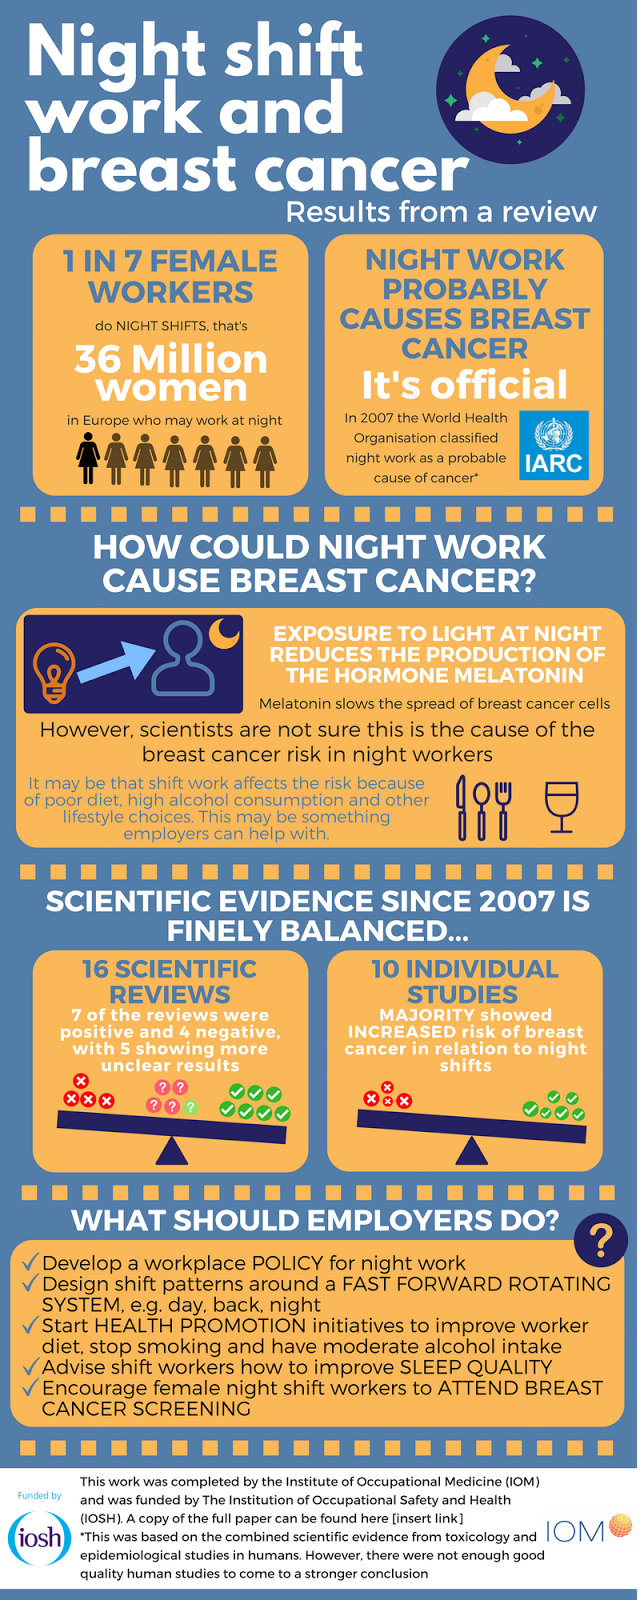 Night shifts raise women's cancer risk